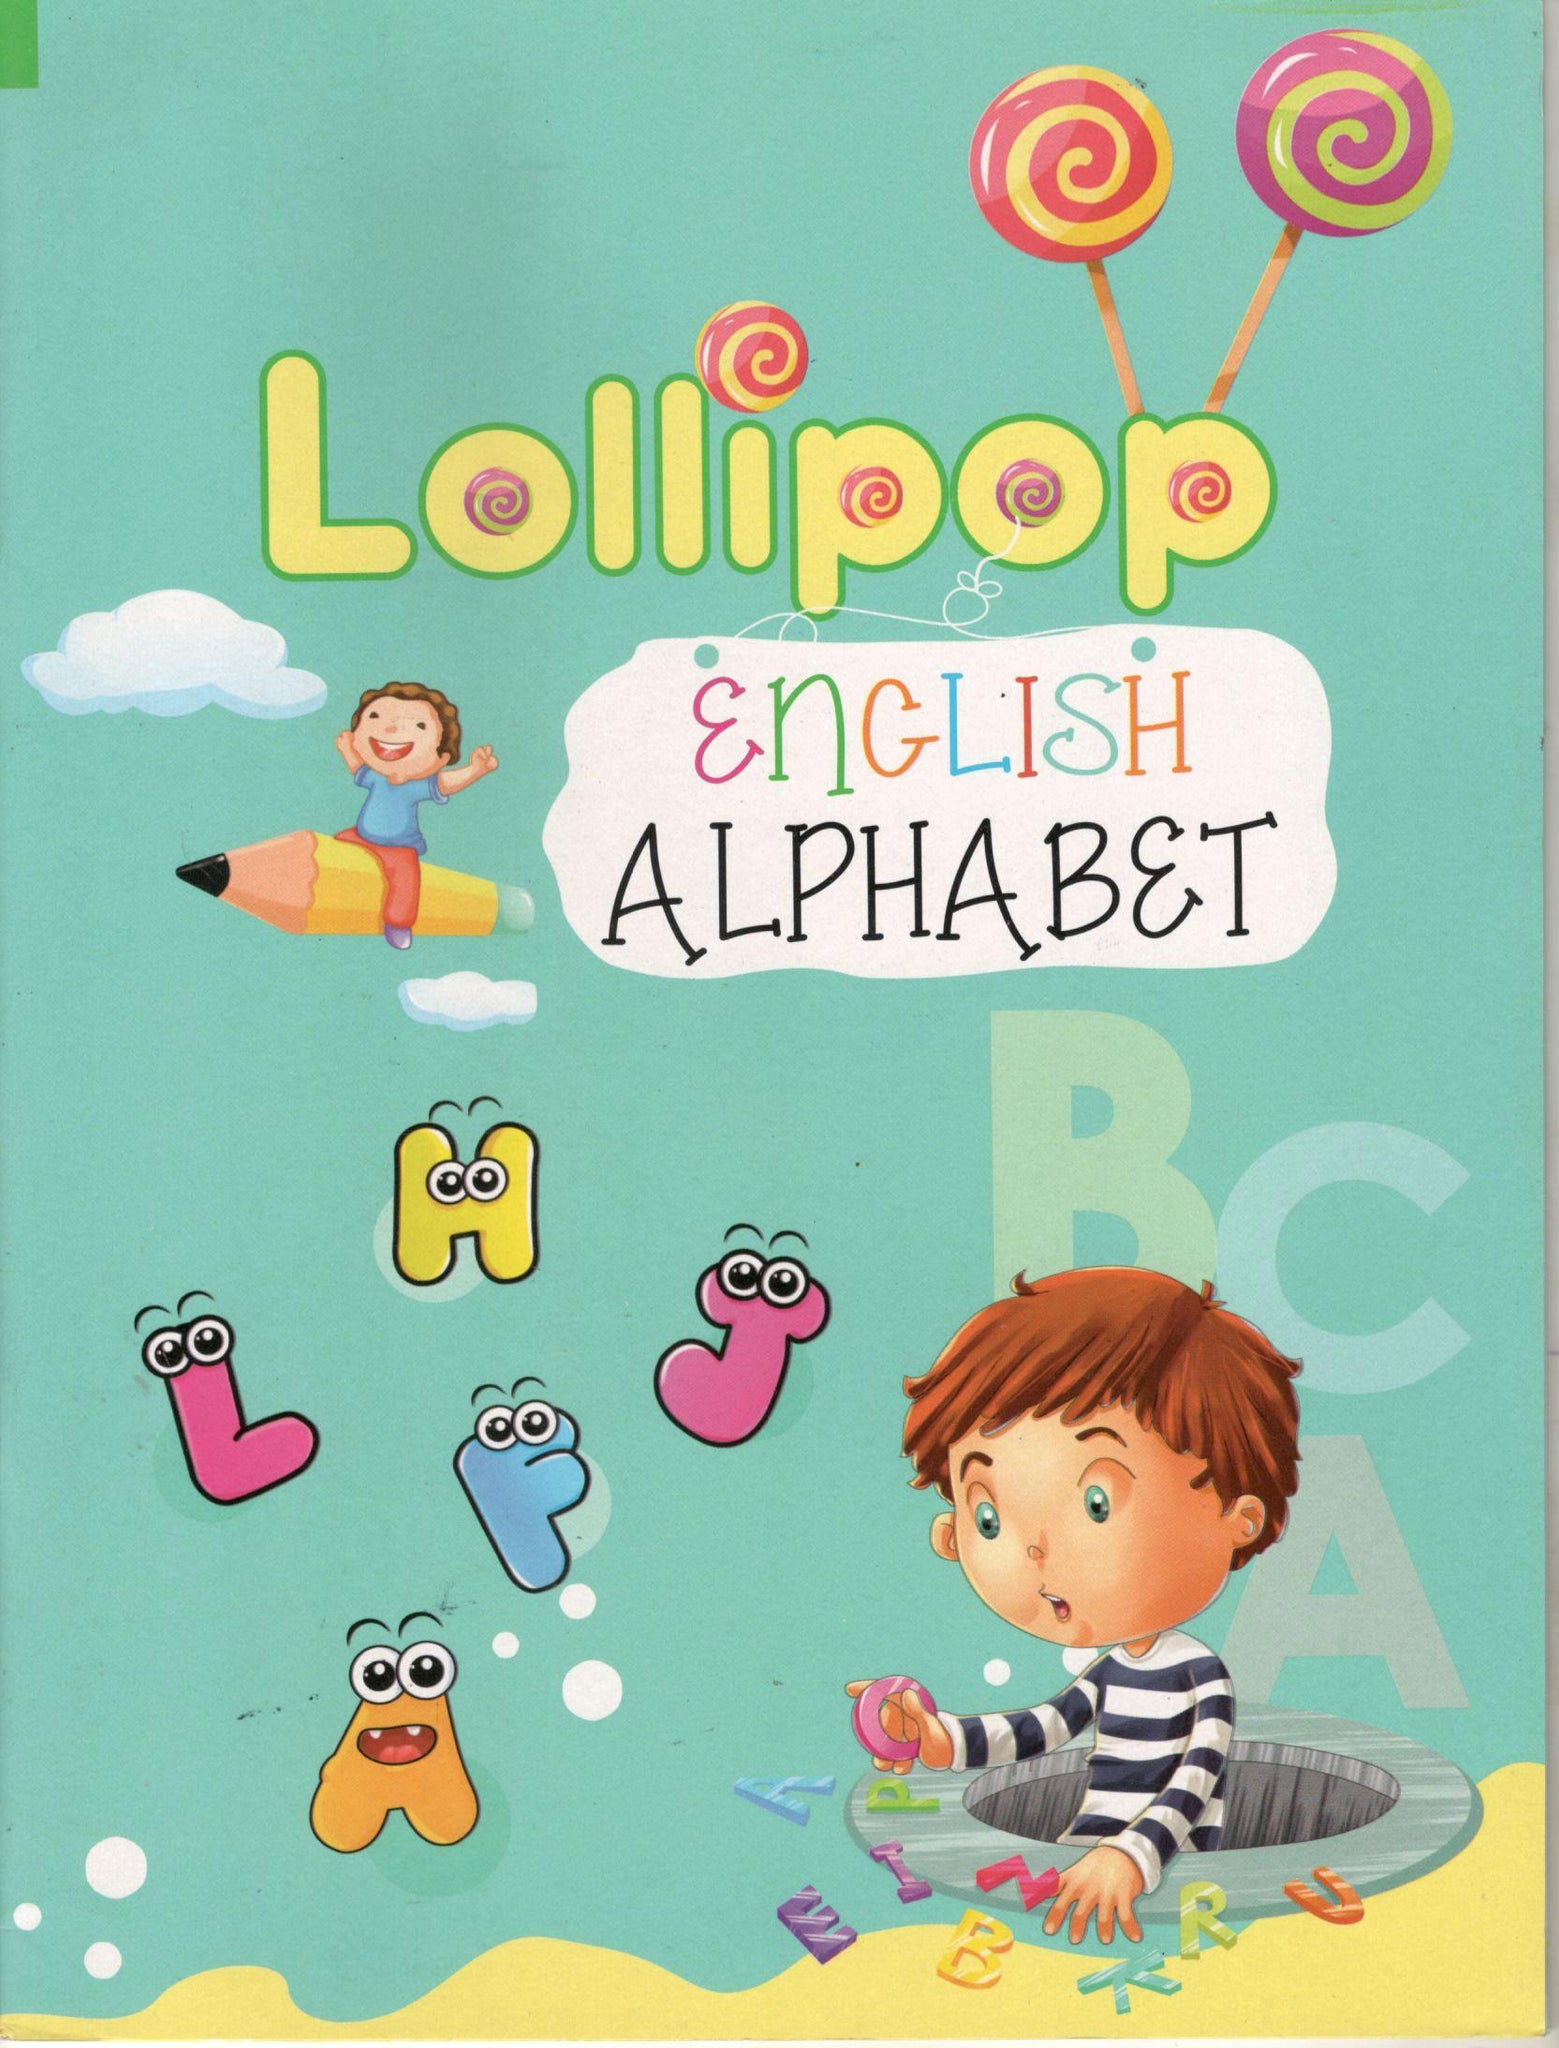 Lollipop English Alphabet